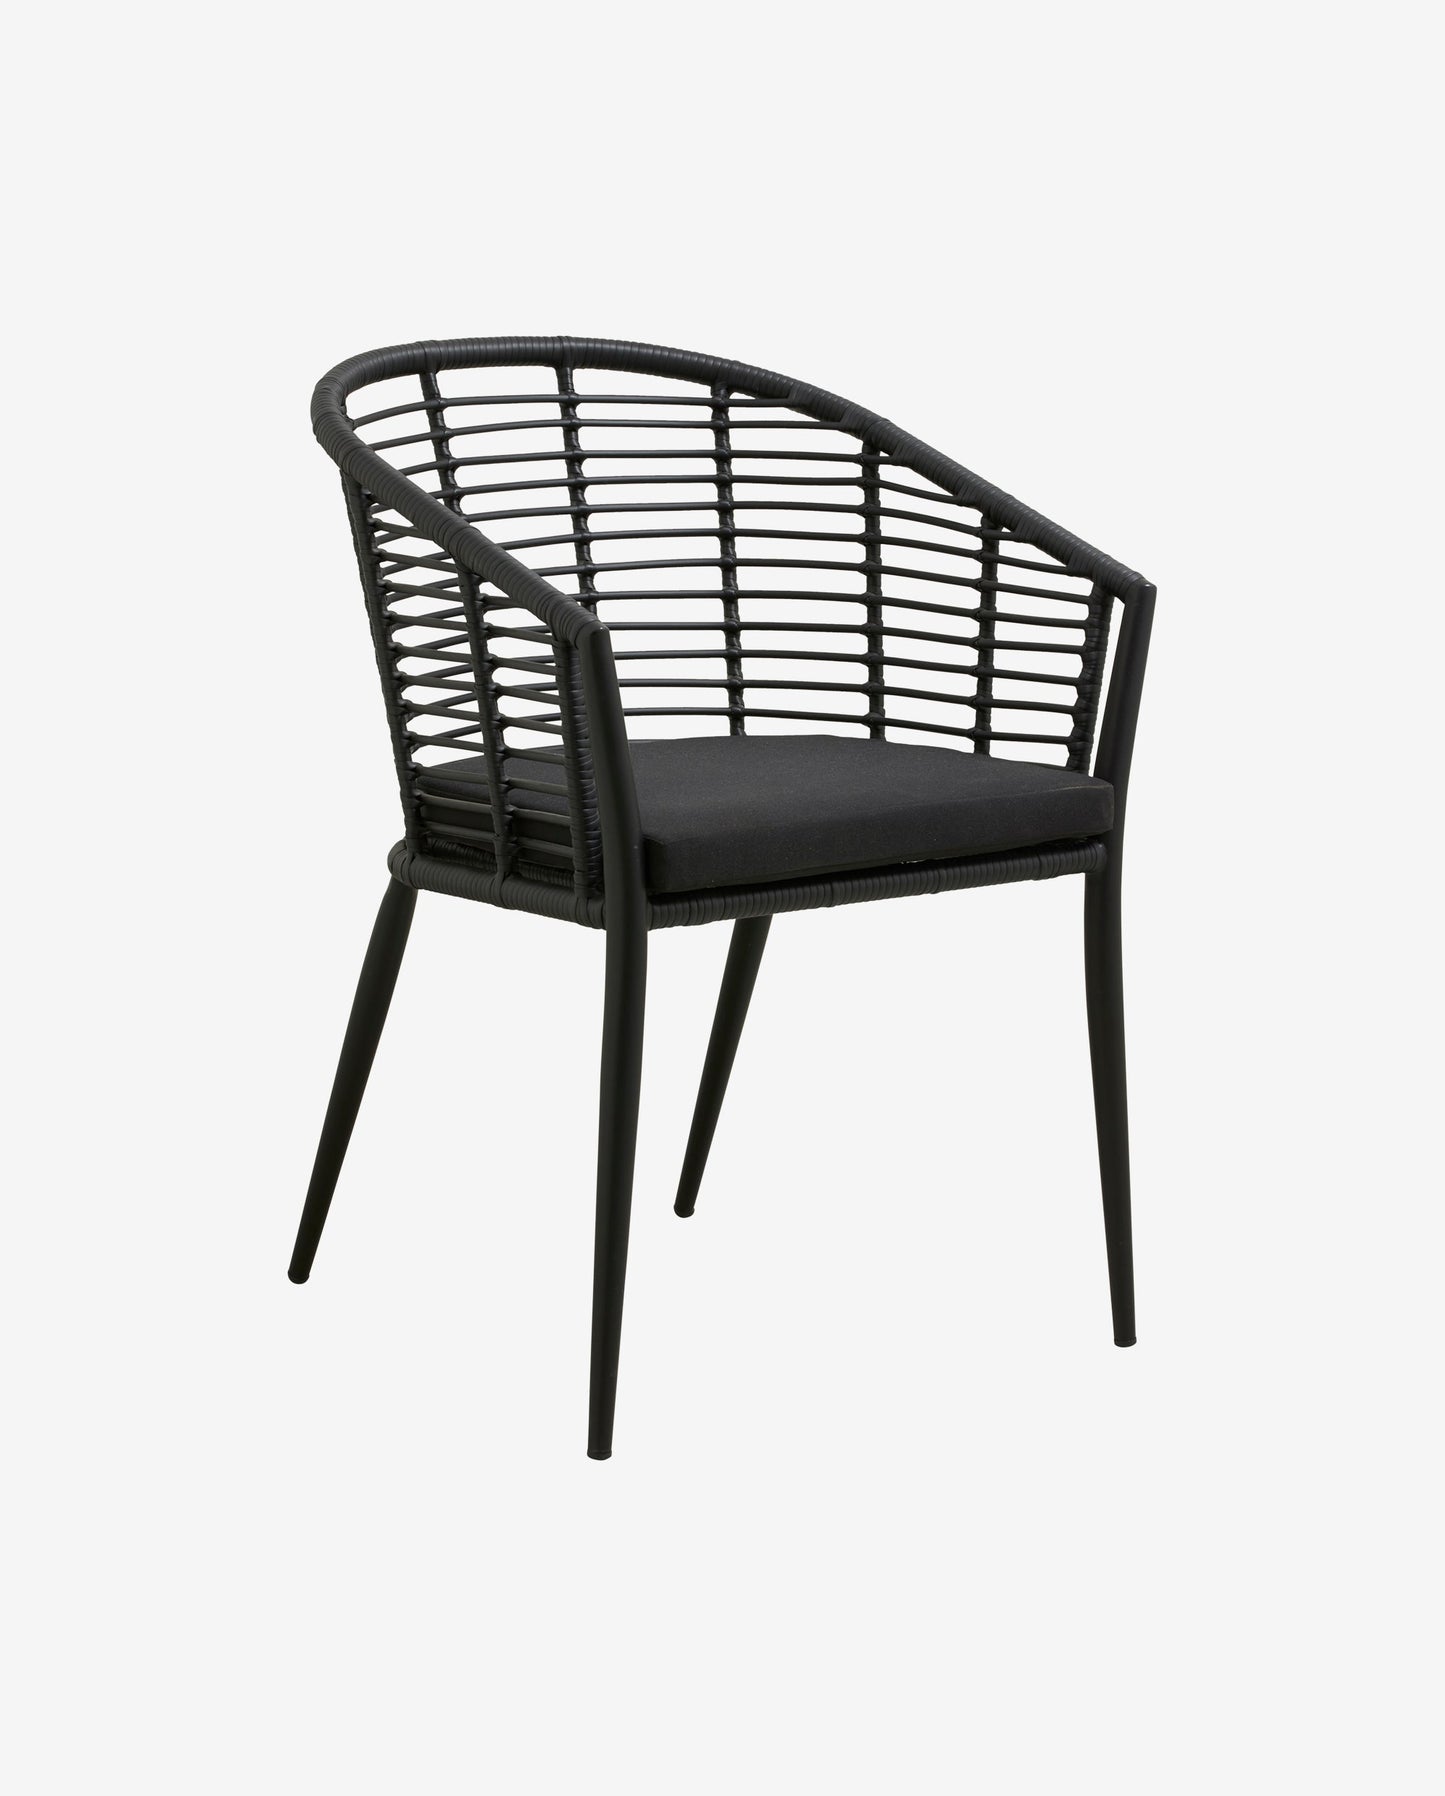 Nordal SALIX garden chair, black